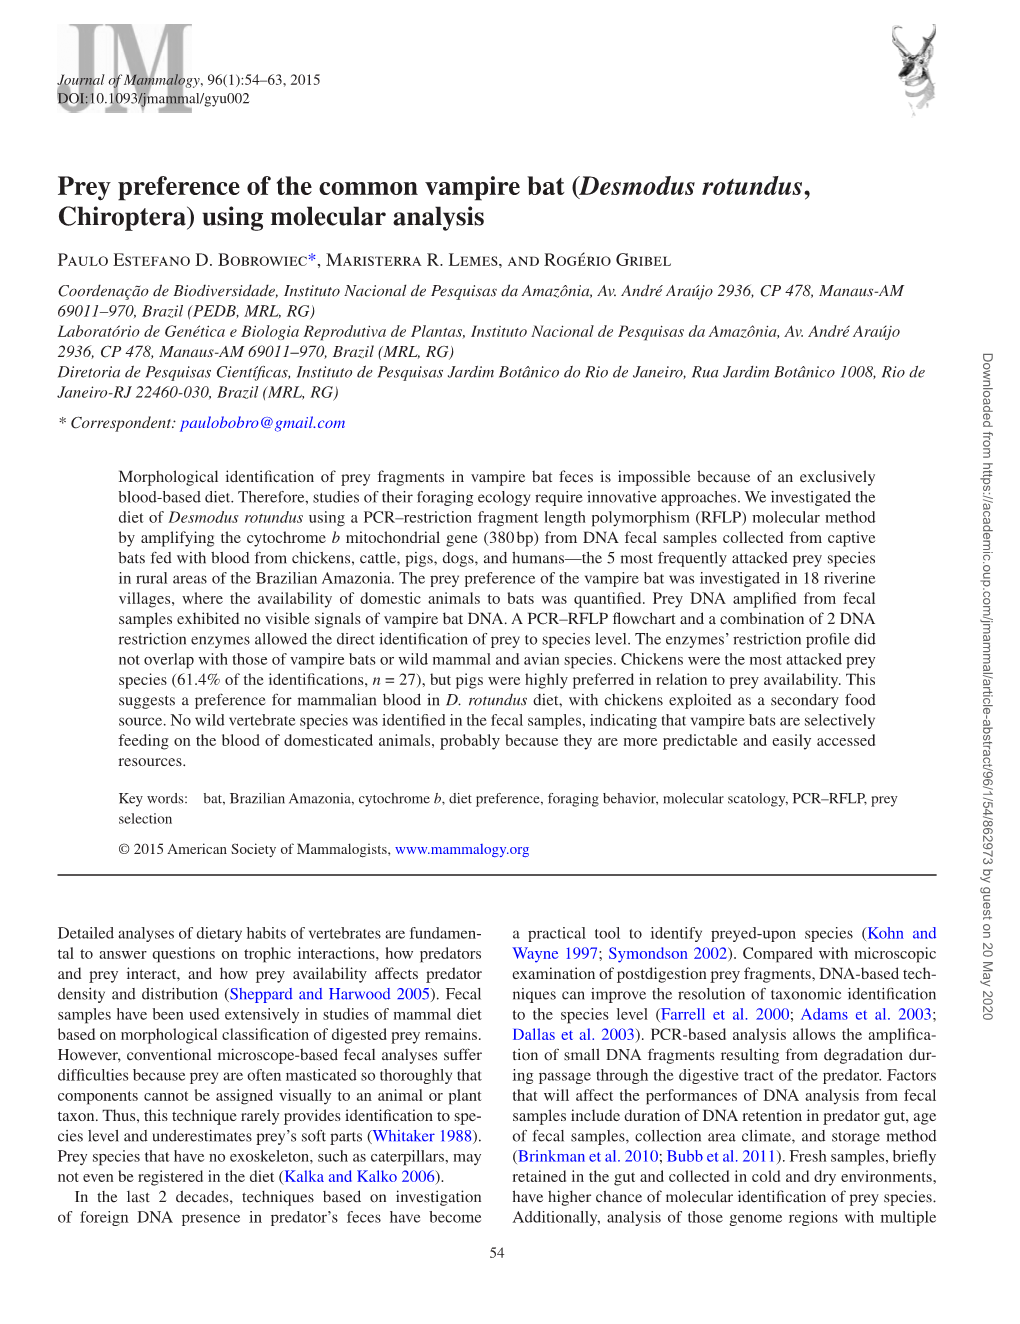 Desmodus Rotundus, Chiroptera) Using Molecular Analysis